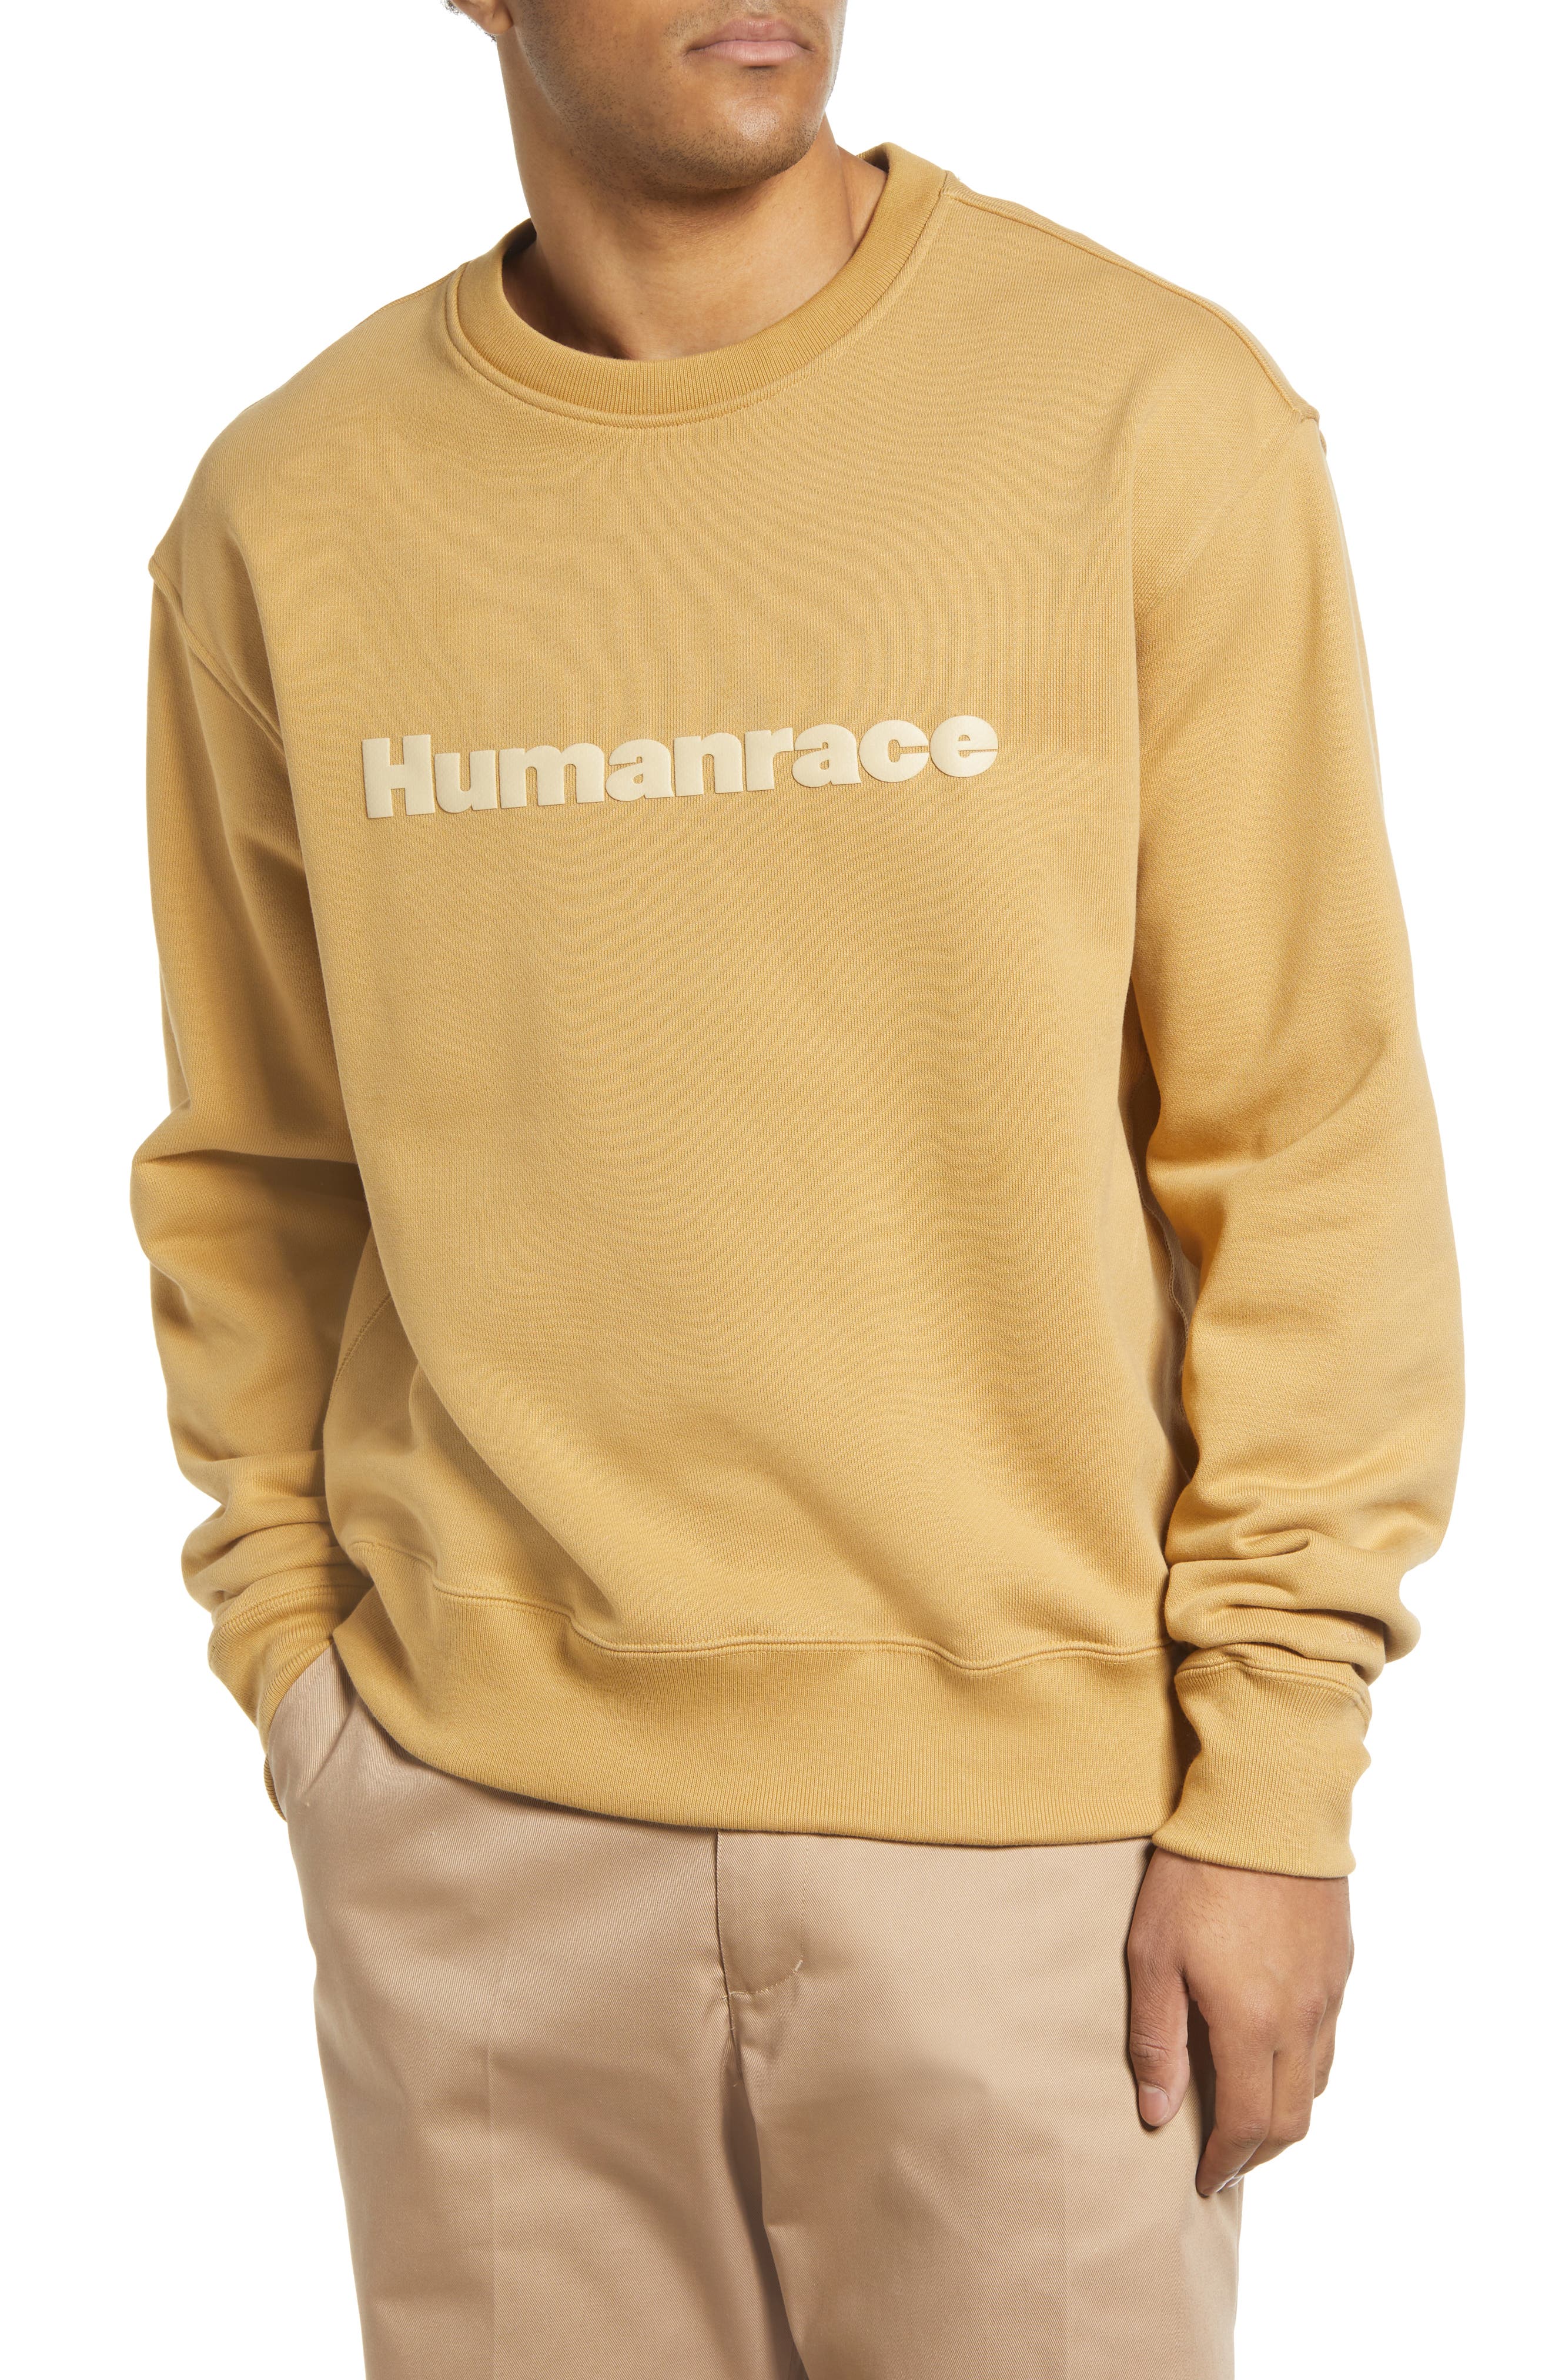 Brand New World Sweatshirt Vintage Brand New World Embroidery Sweatshirt Jumper Pullover Yellow Size XXL